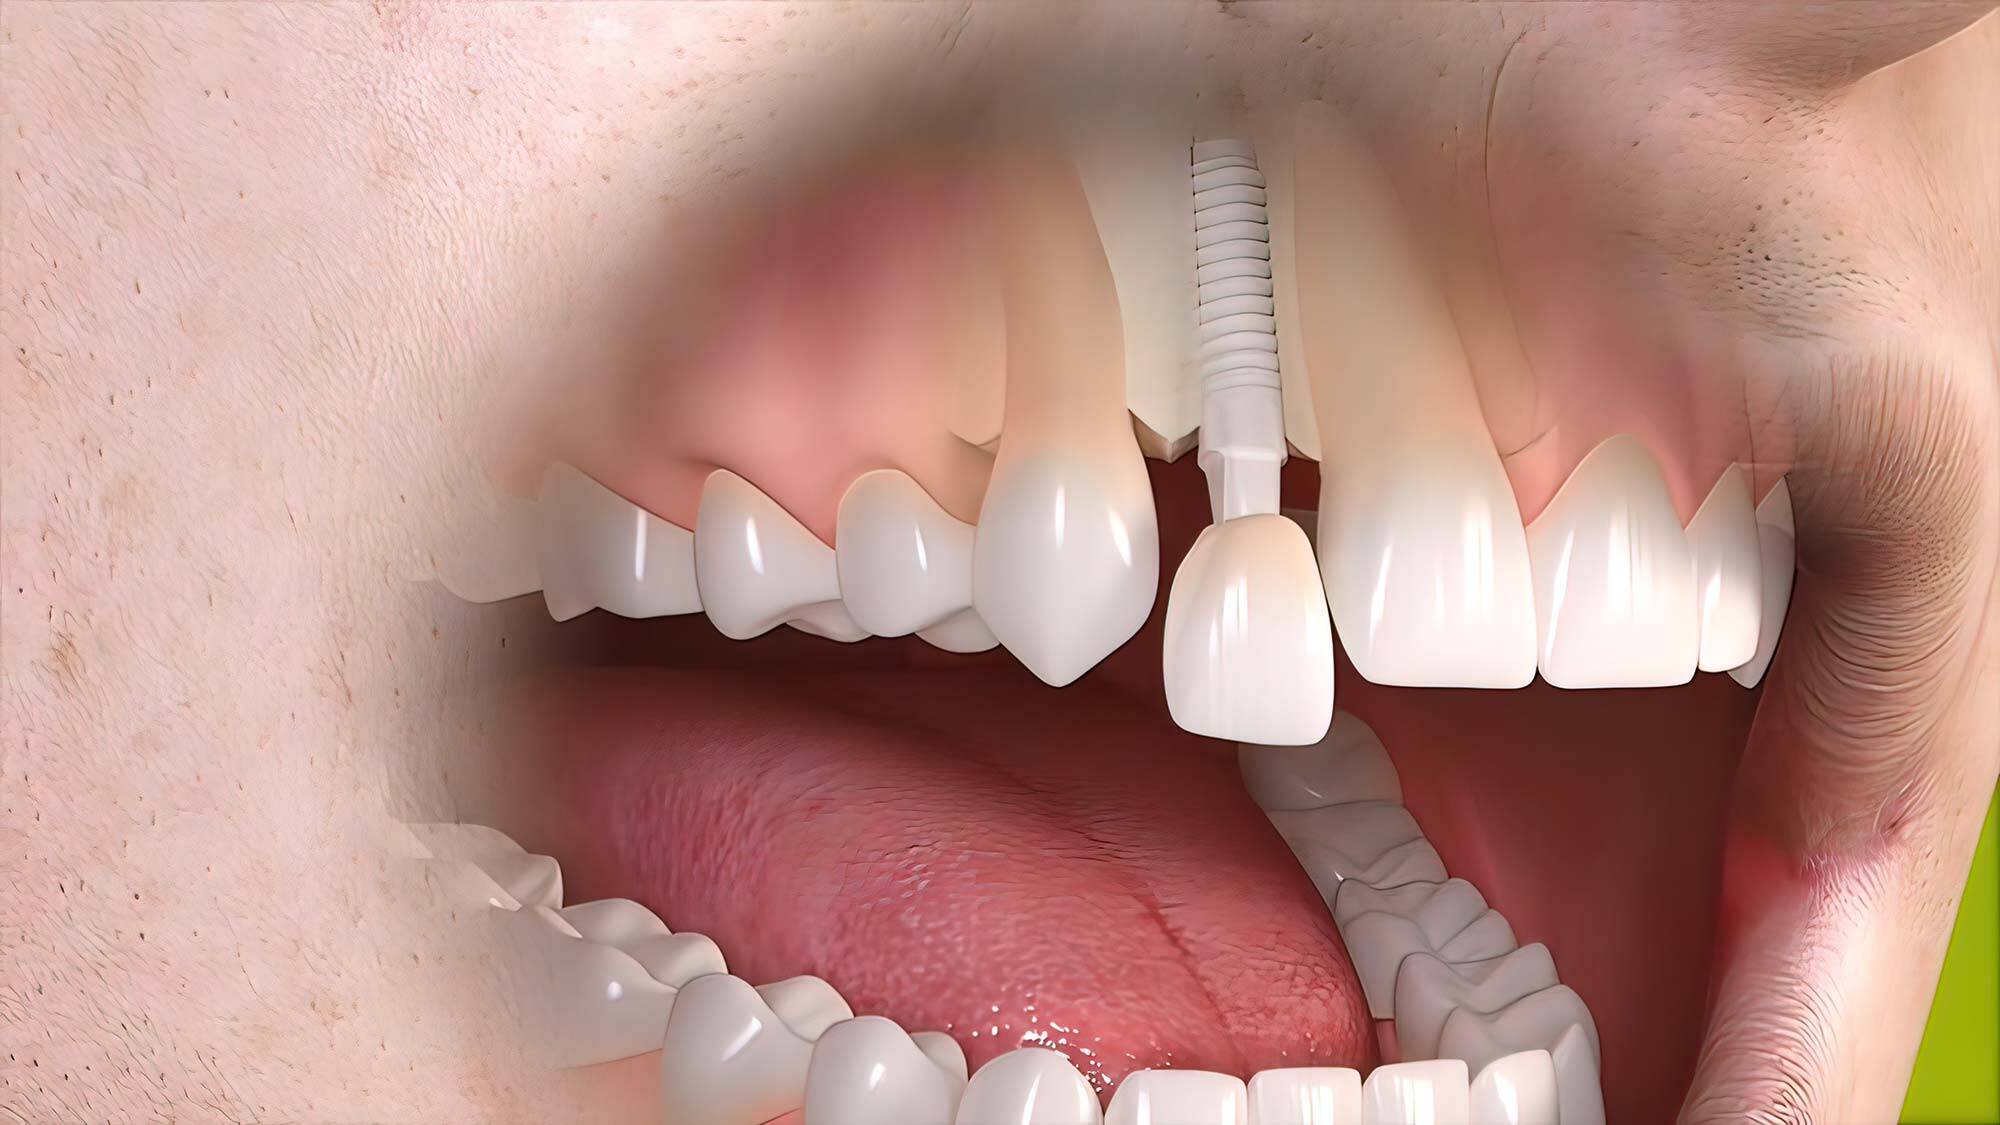 Dental Implant vs Implant Bridge